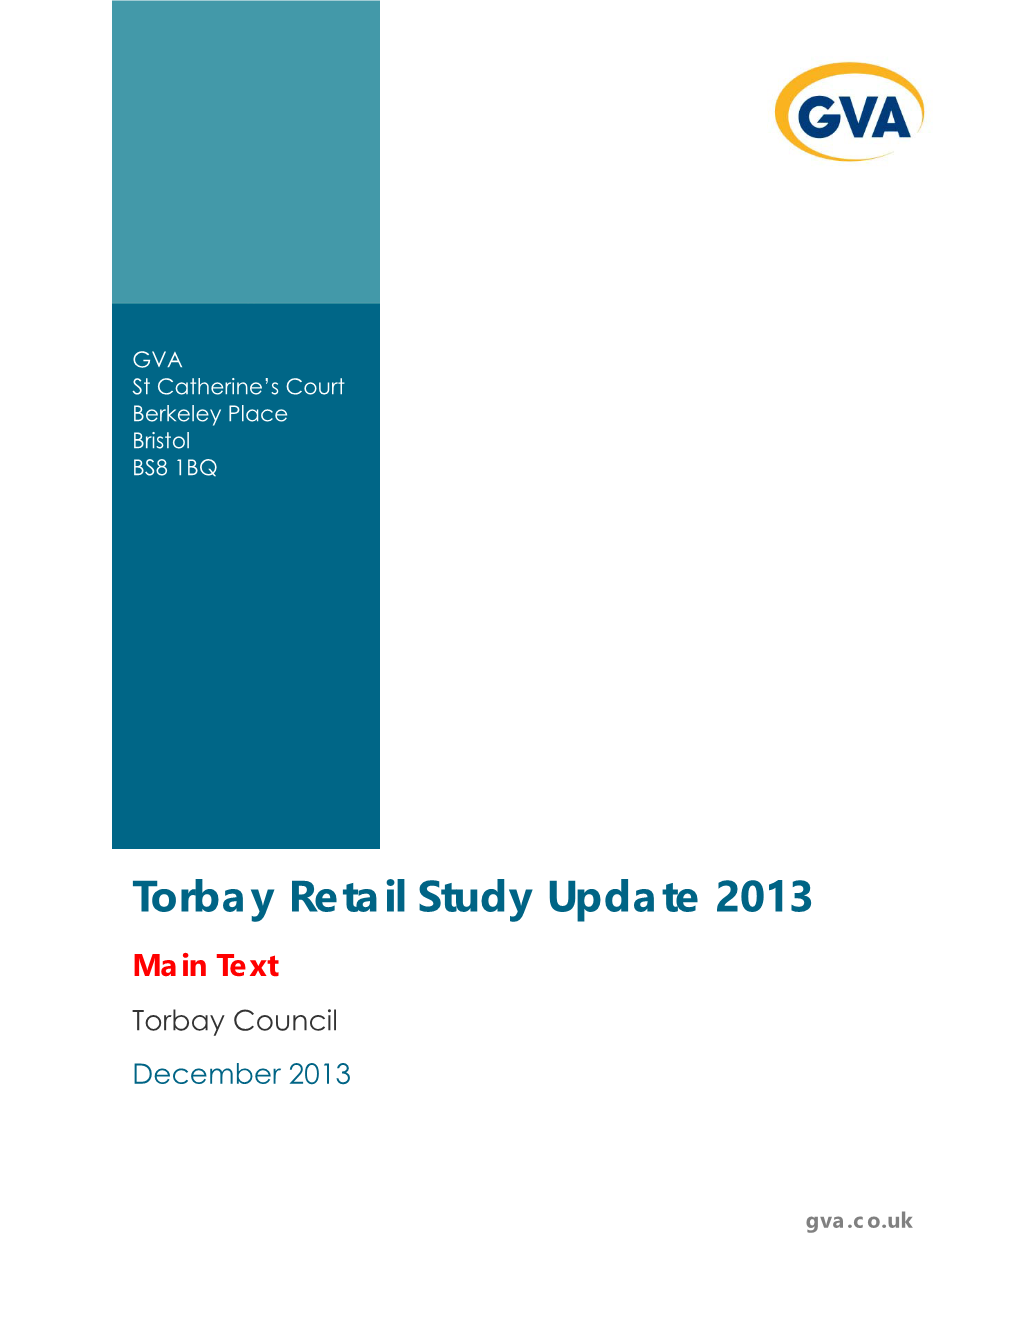 Torbay Retail Study Update 2013 Finalv1.6